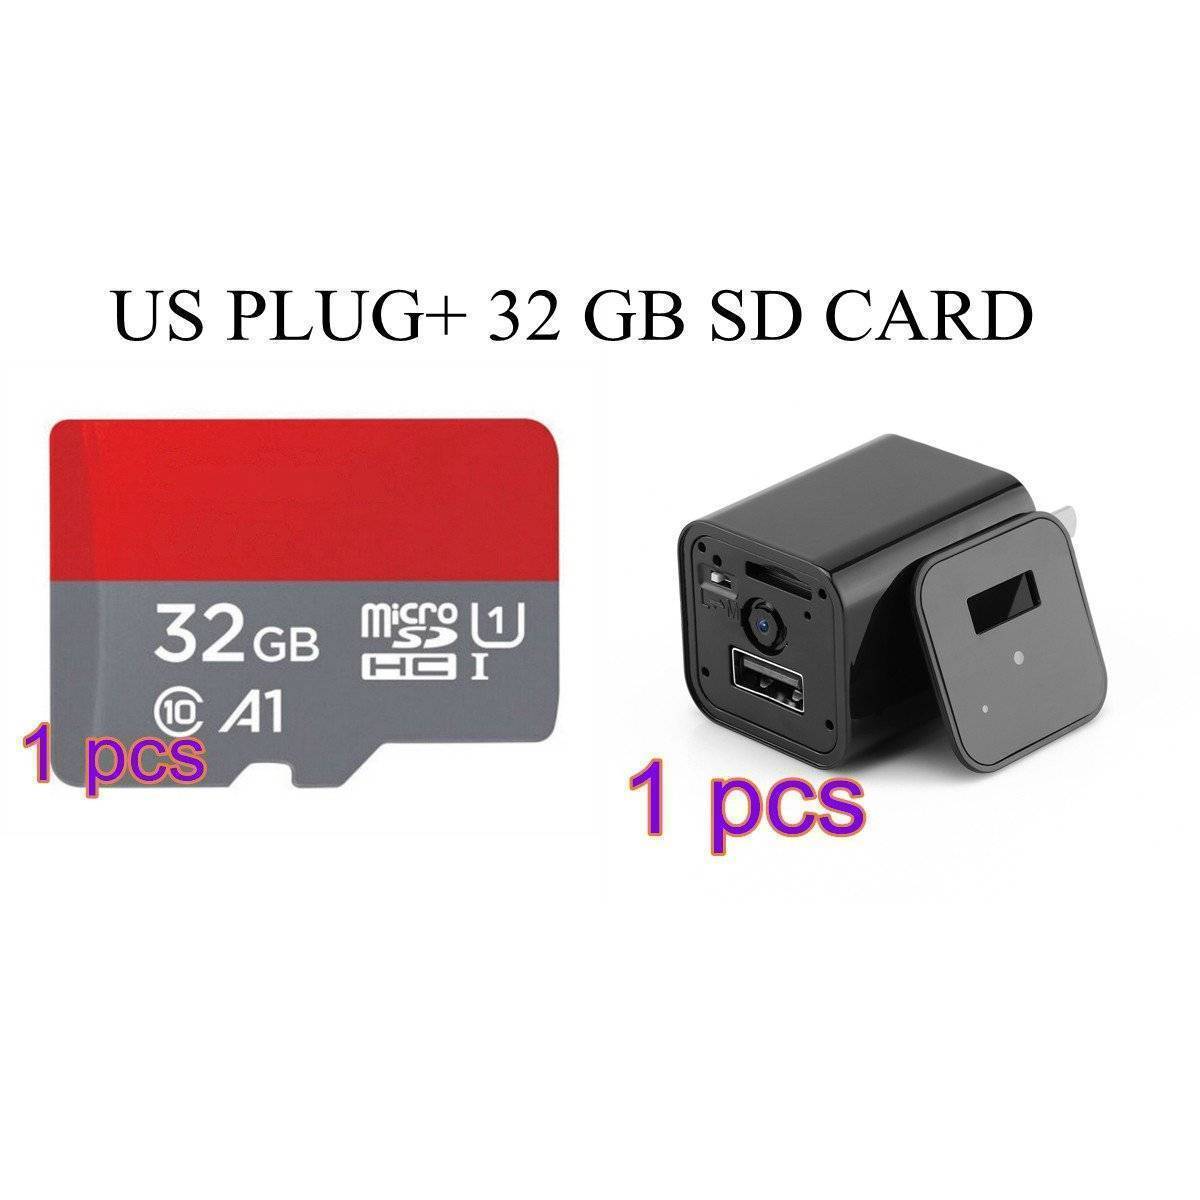 HD 1080P USB Wall Charger Video Camera - US Version